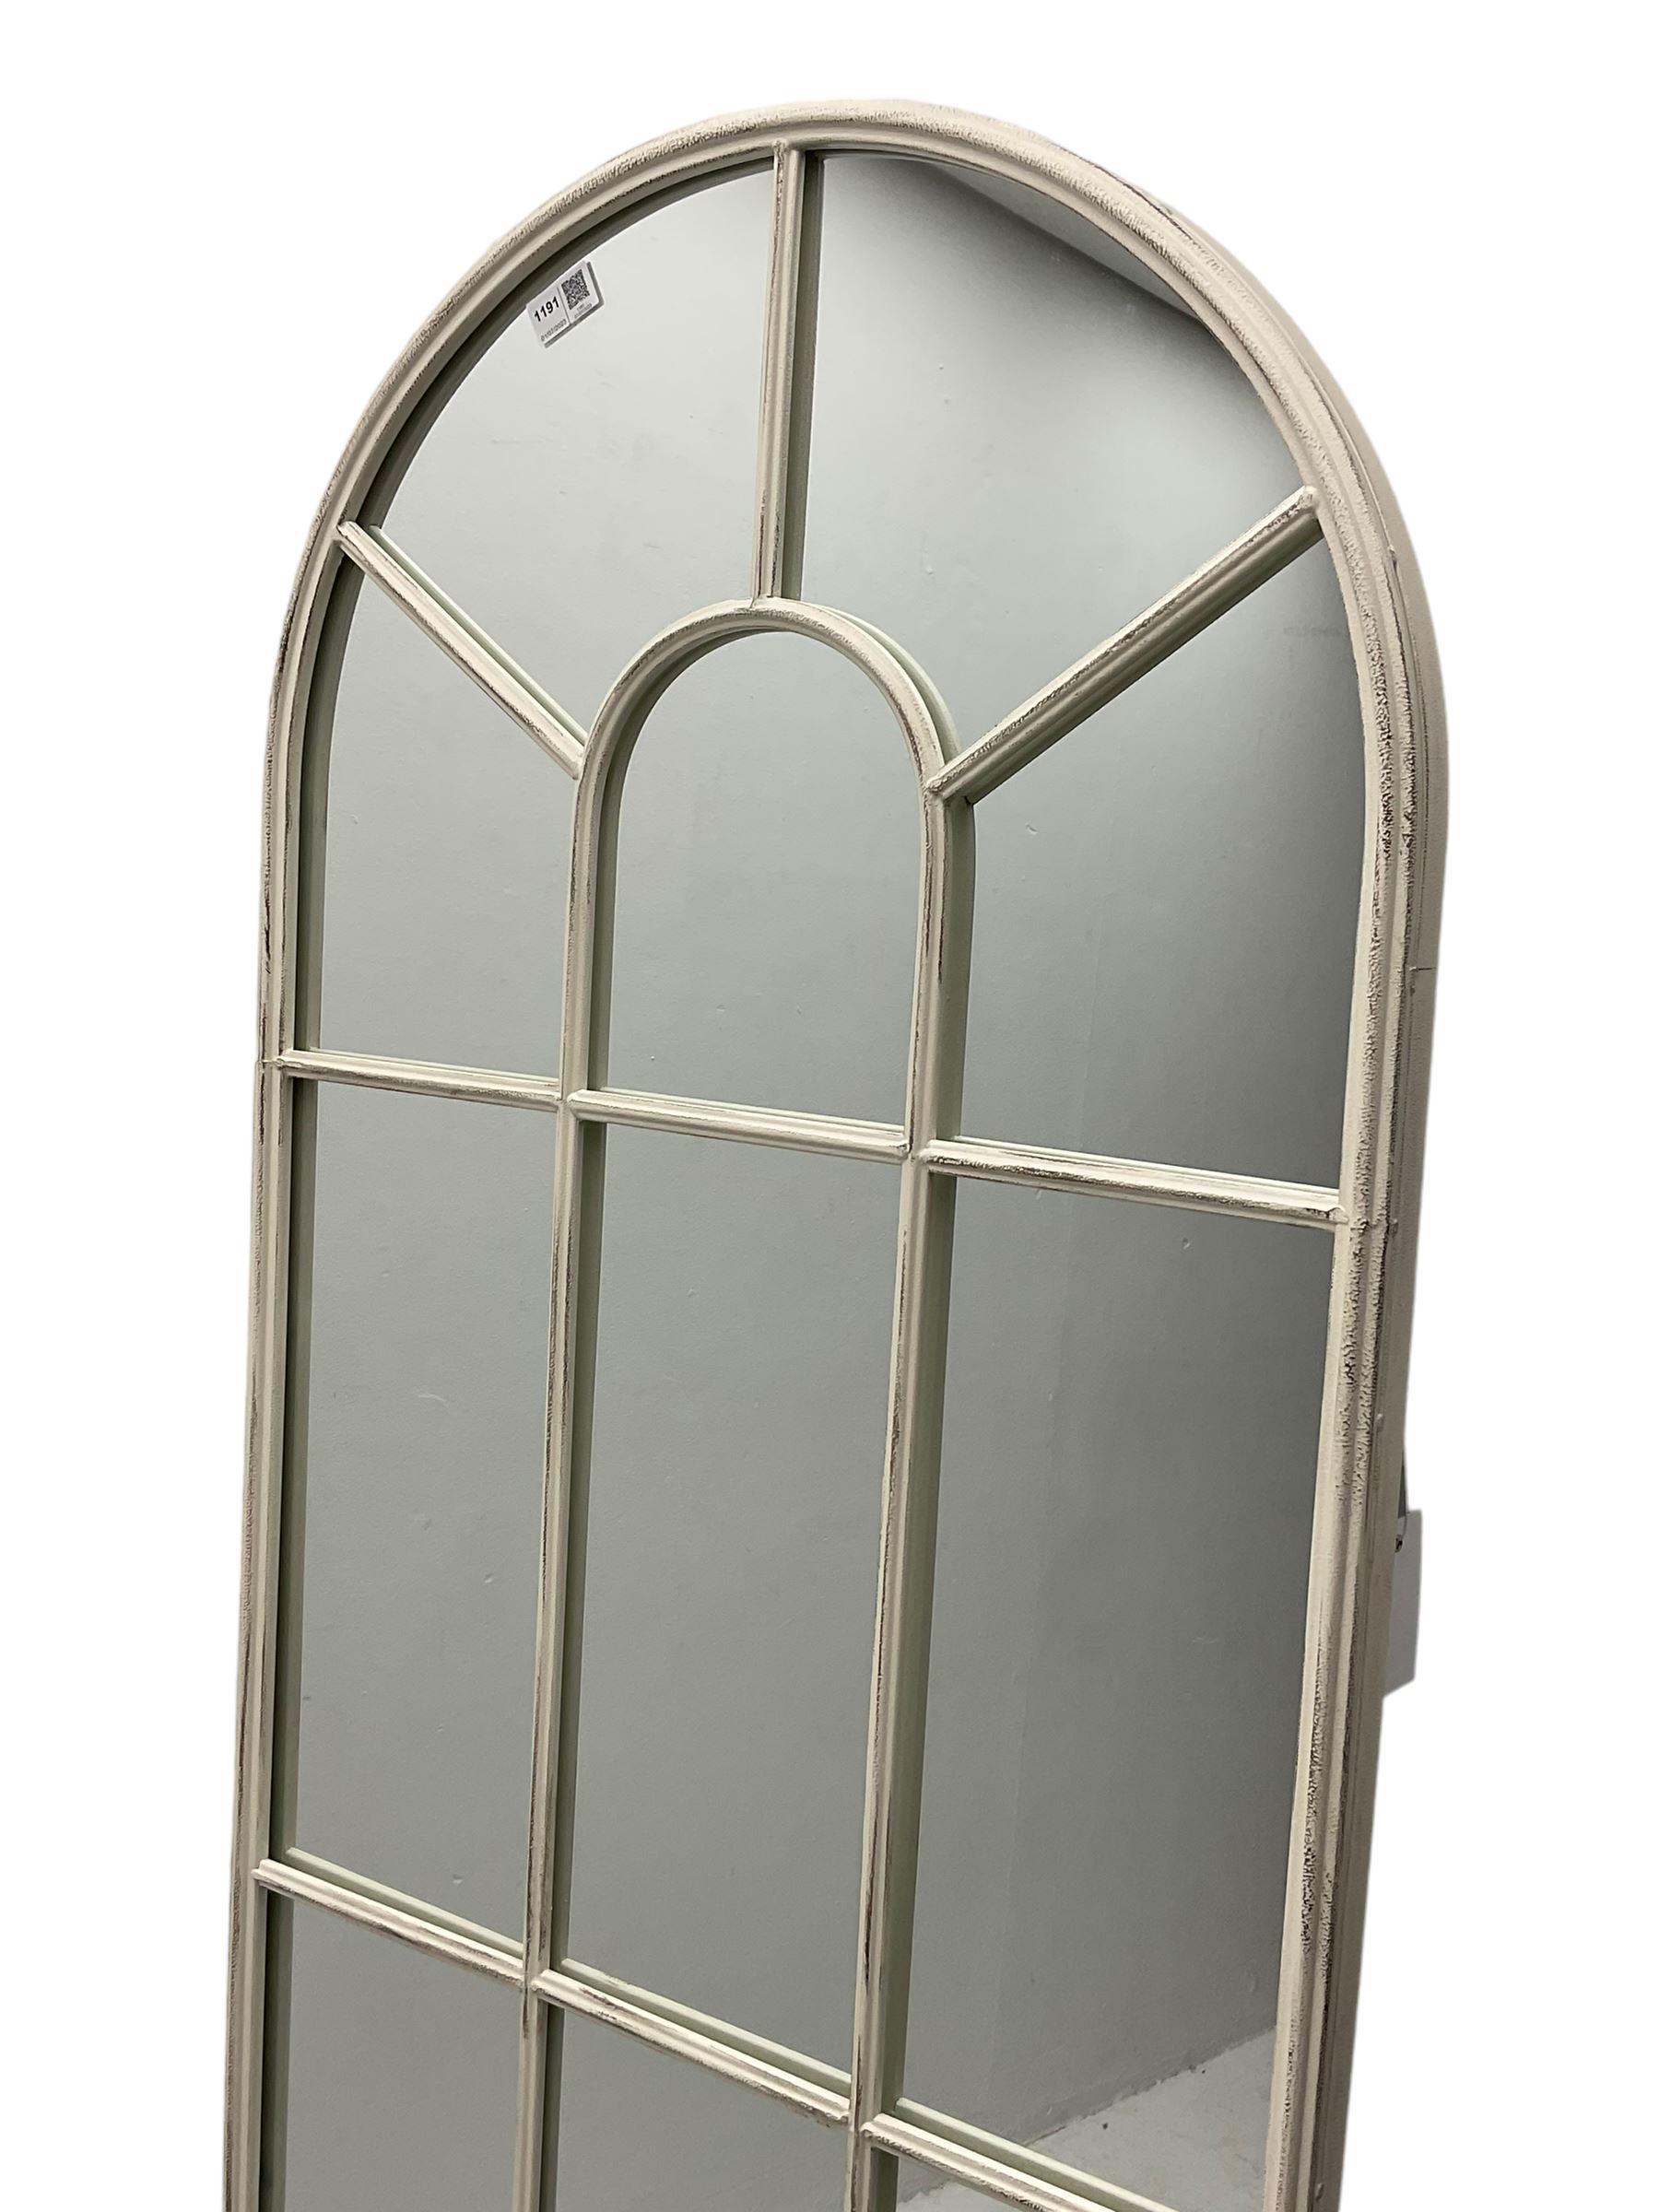 White finish metal garden window mirror - Image 2 of 3